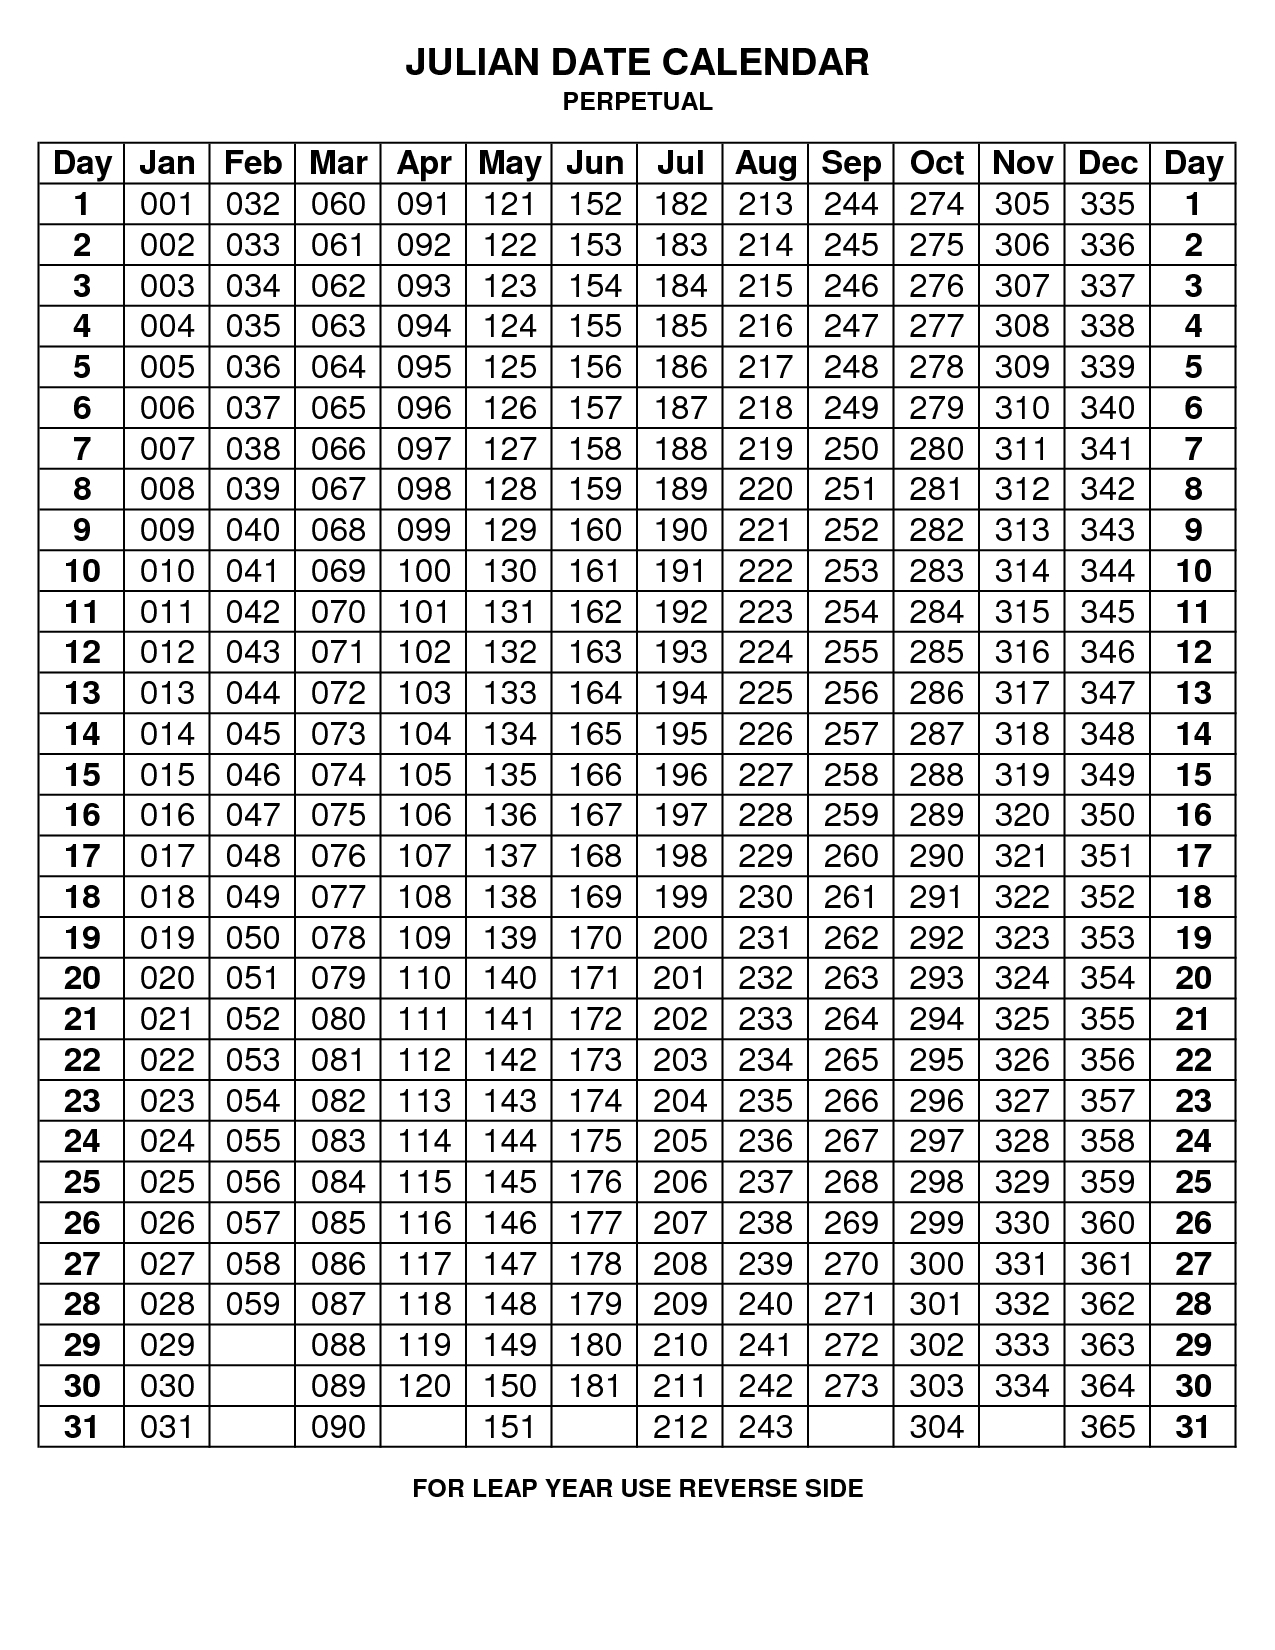 2021 Julian Date Calendar Printable Leap Year - Calendar